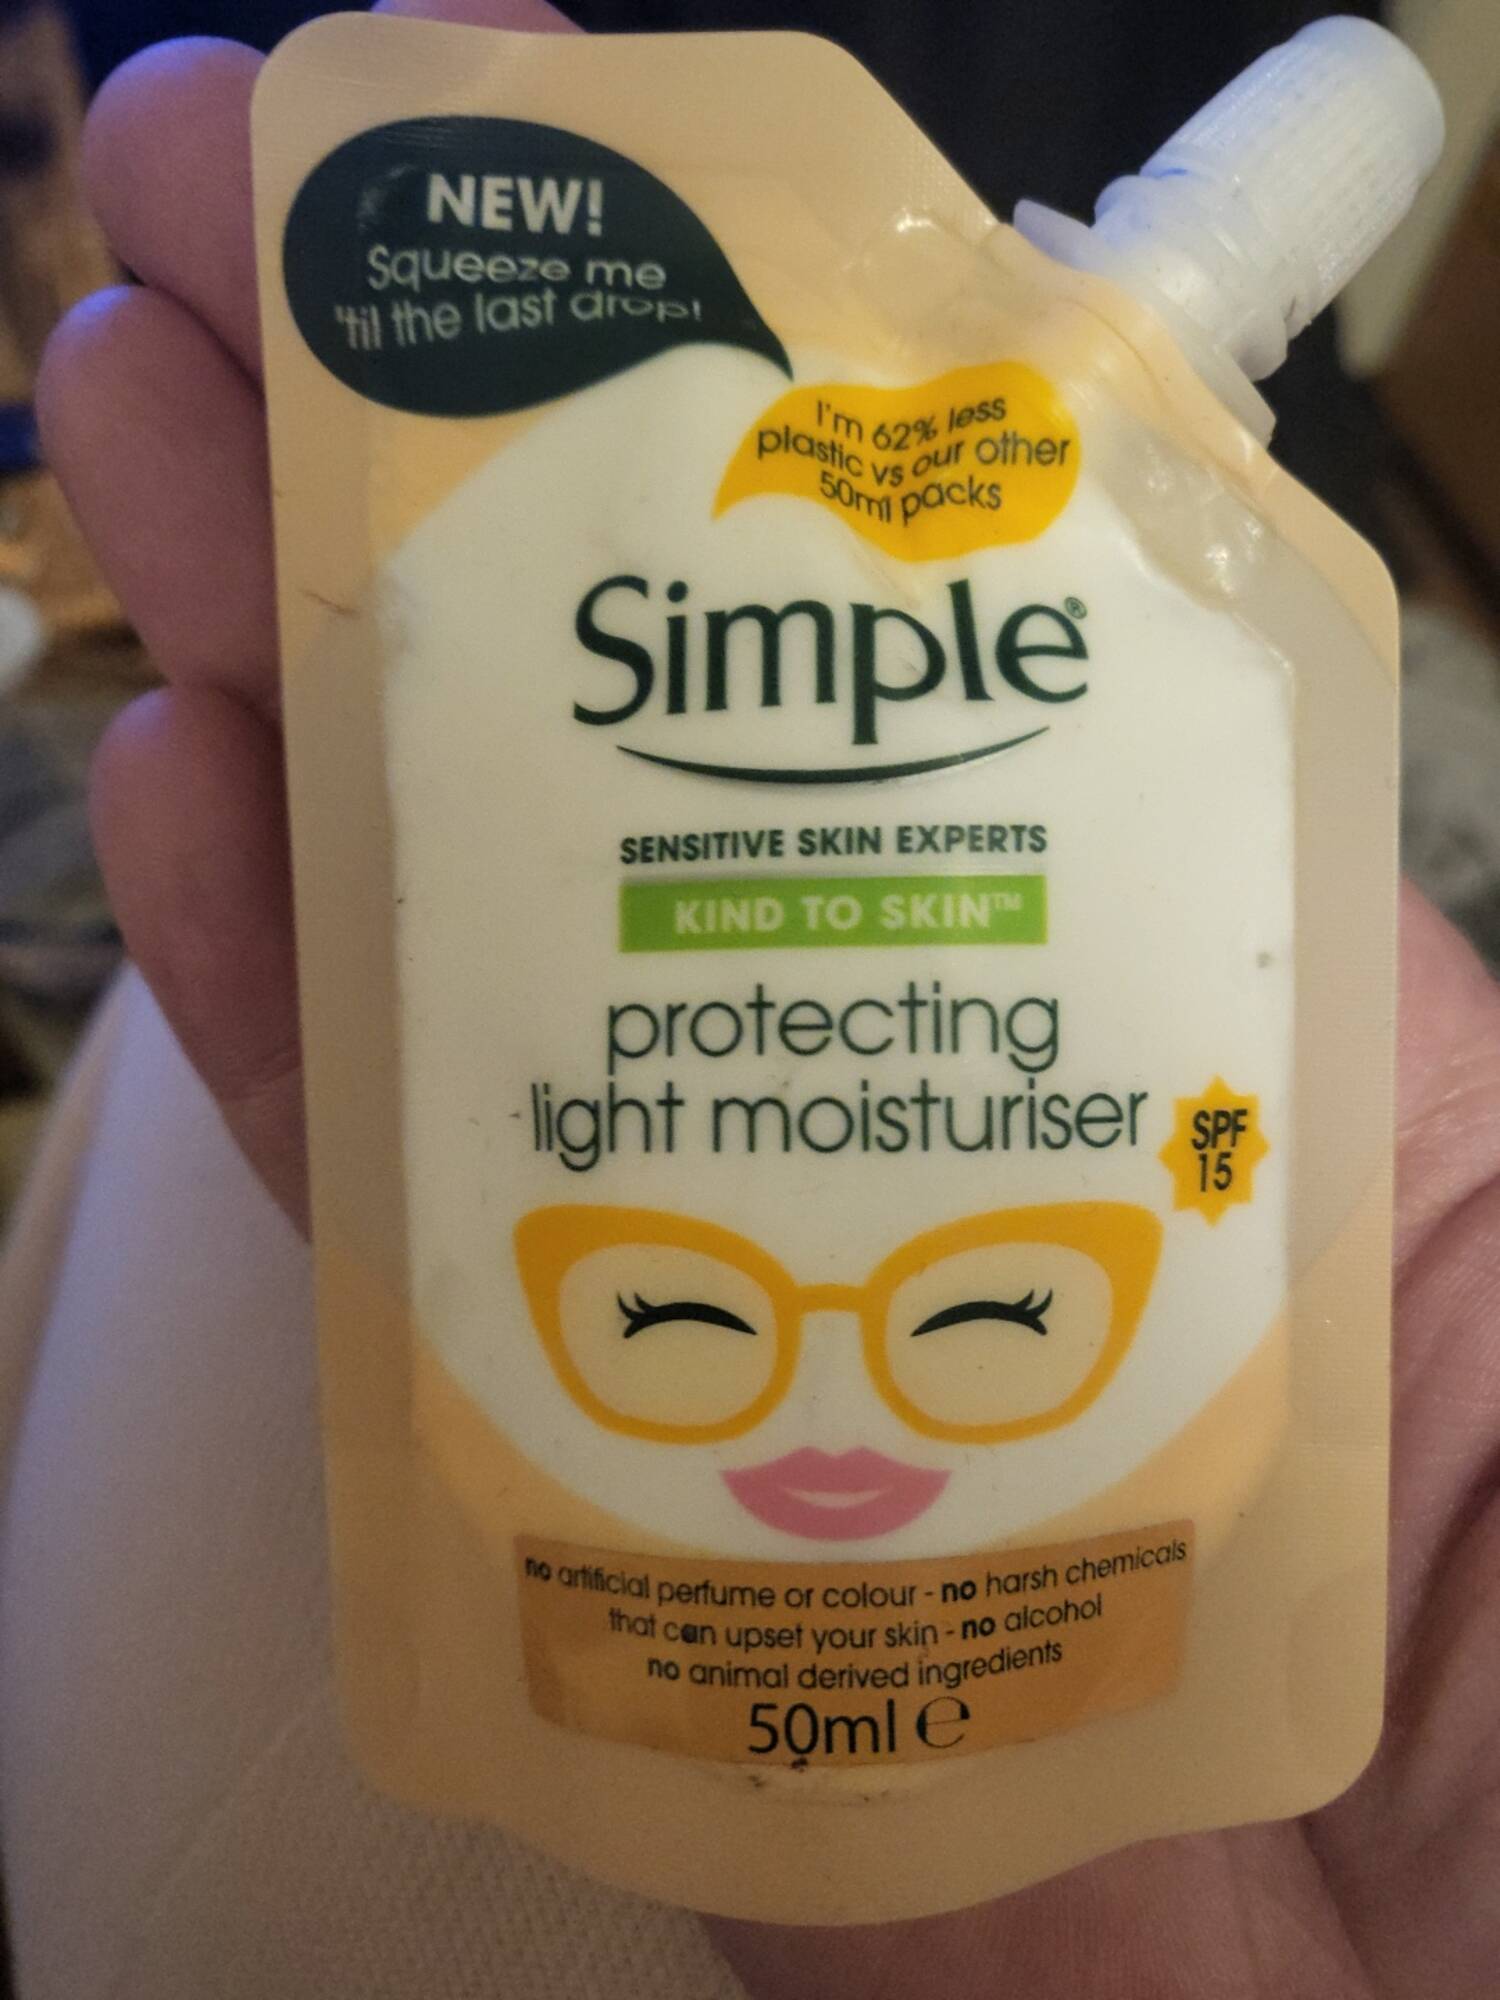 SIMPLE - Kind to skin - Protecting light moisturiser SPF 15